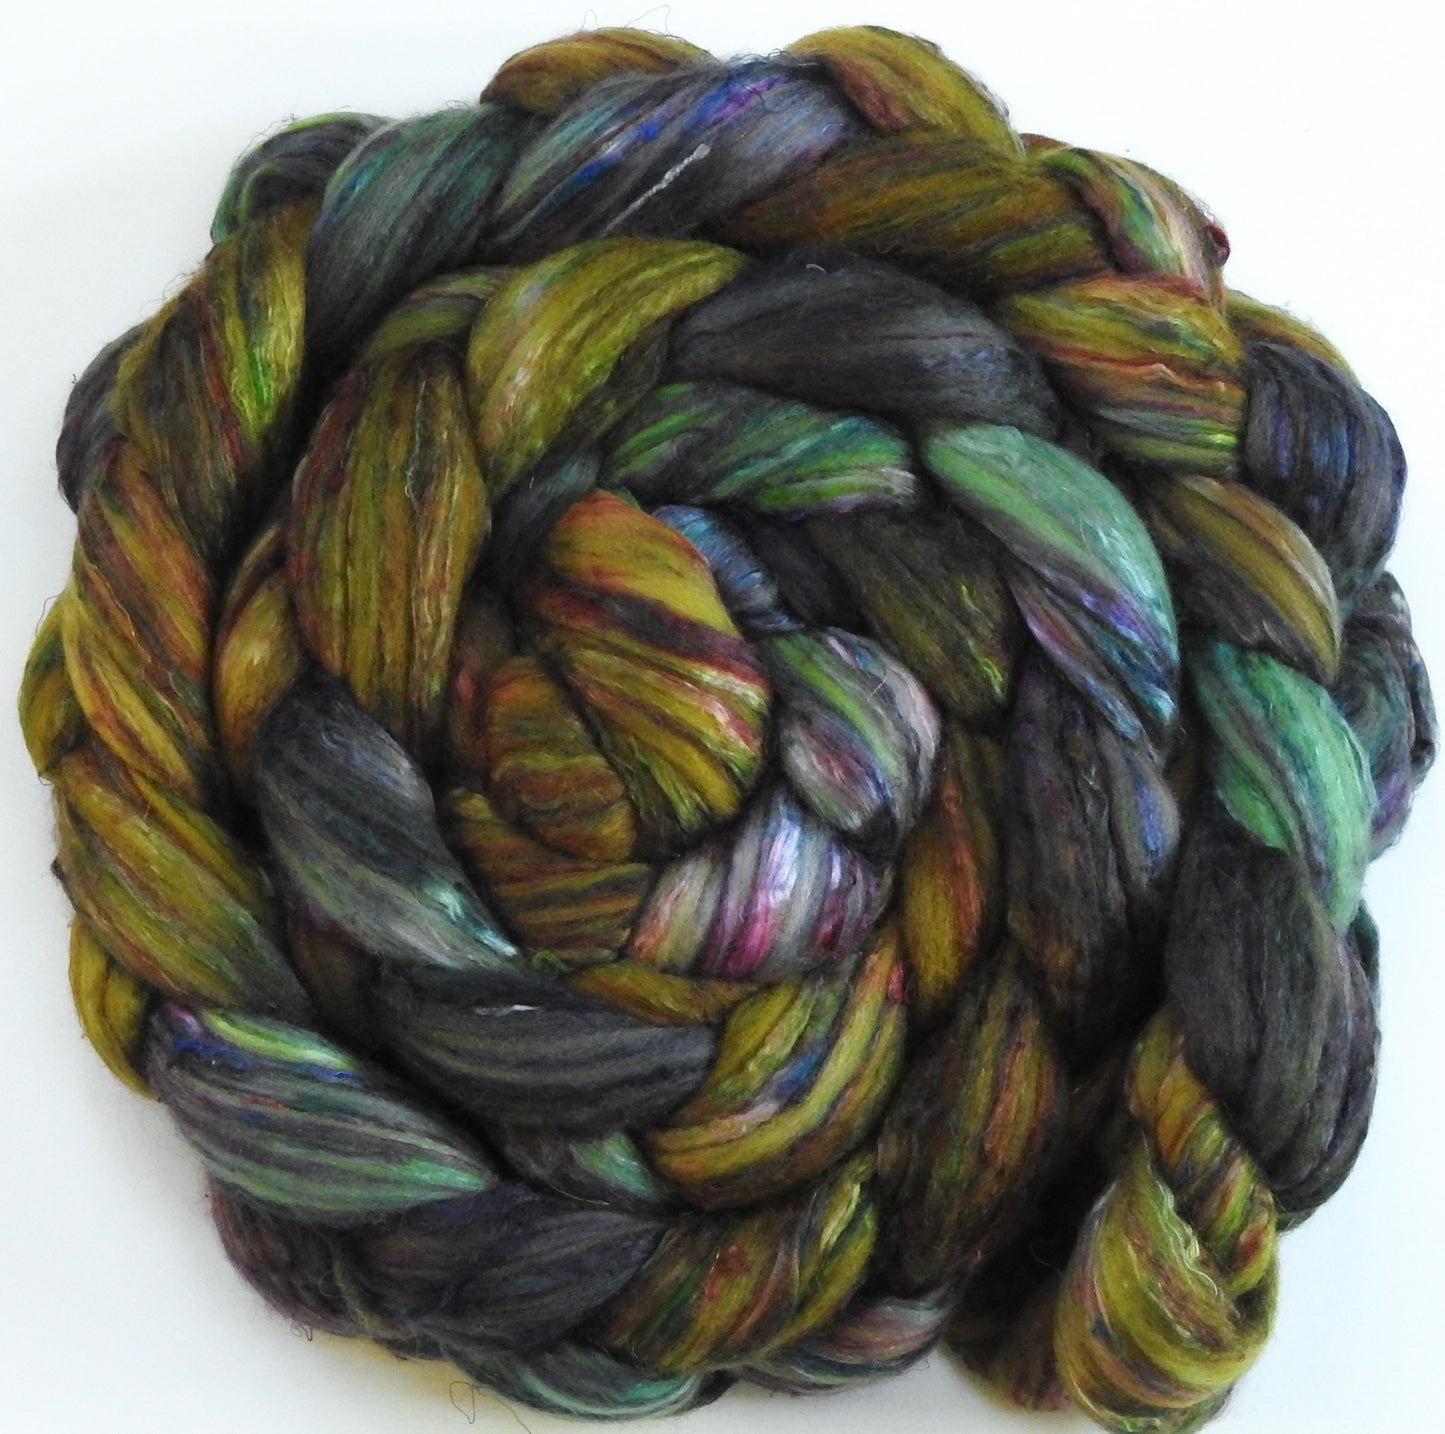 Batt in a Braid #39 - Singular 34 -(5.9 oz.) Falkland Merino/ Mulberry Silk / Sari Silk (50/25/25)